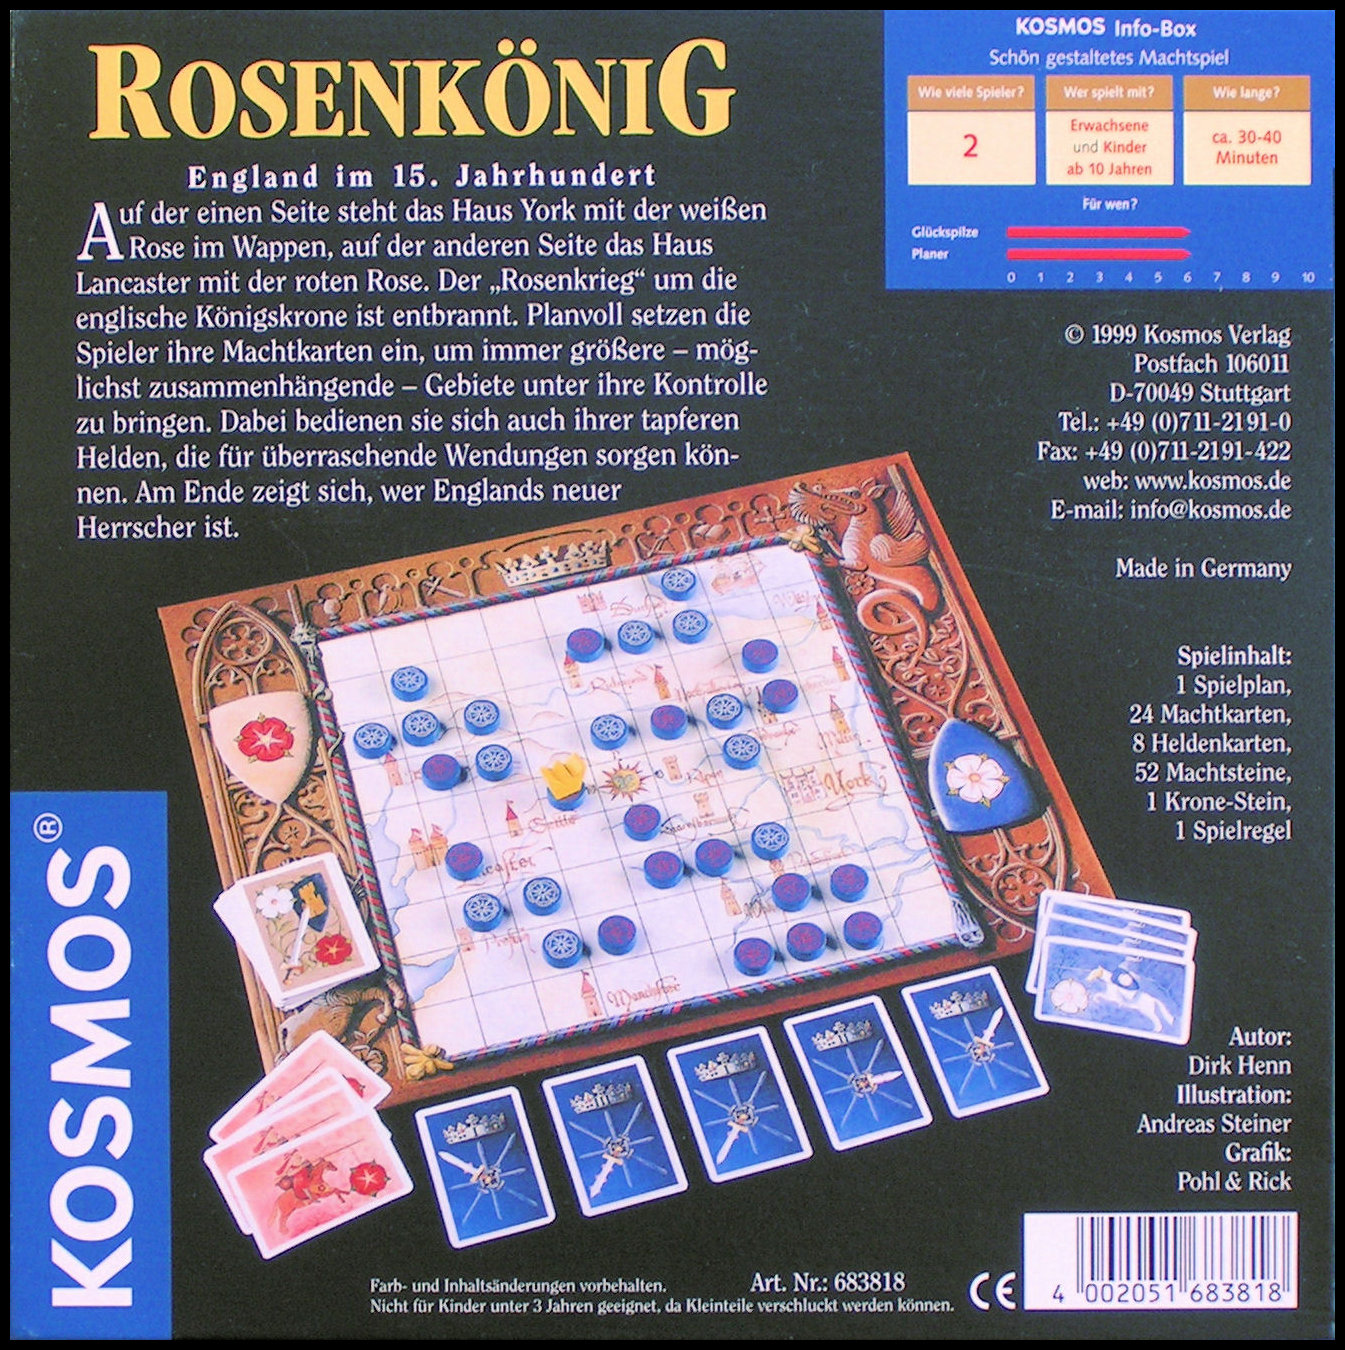 Rosenkoenig - Box Back